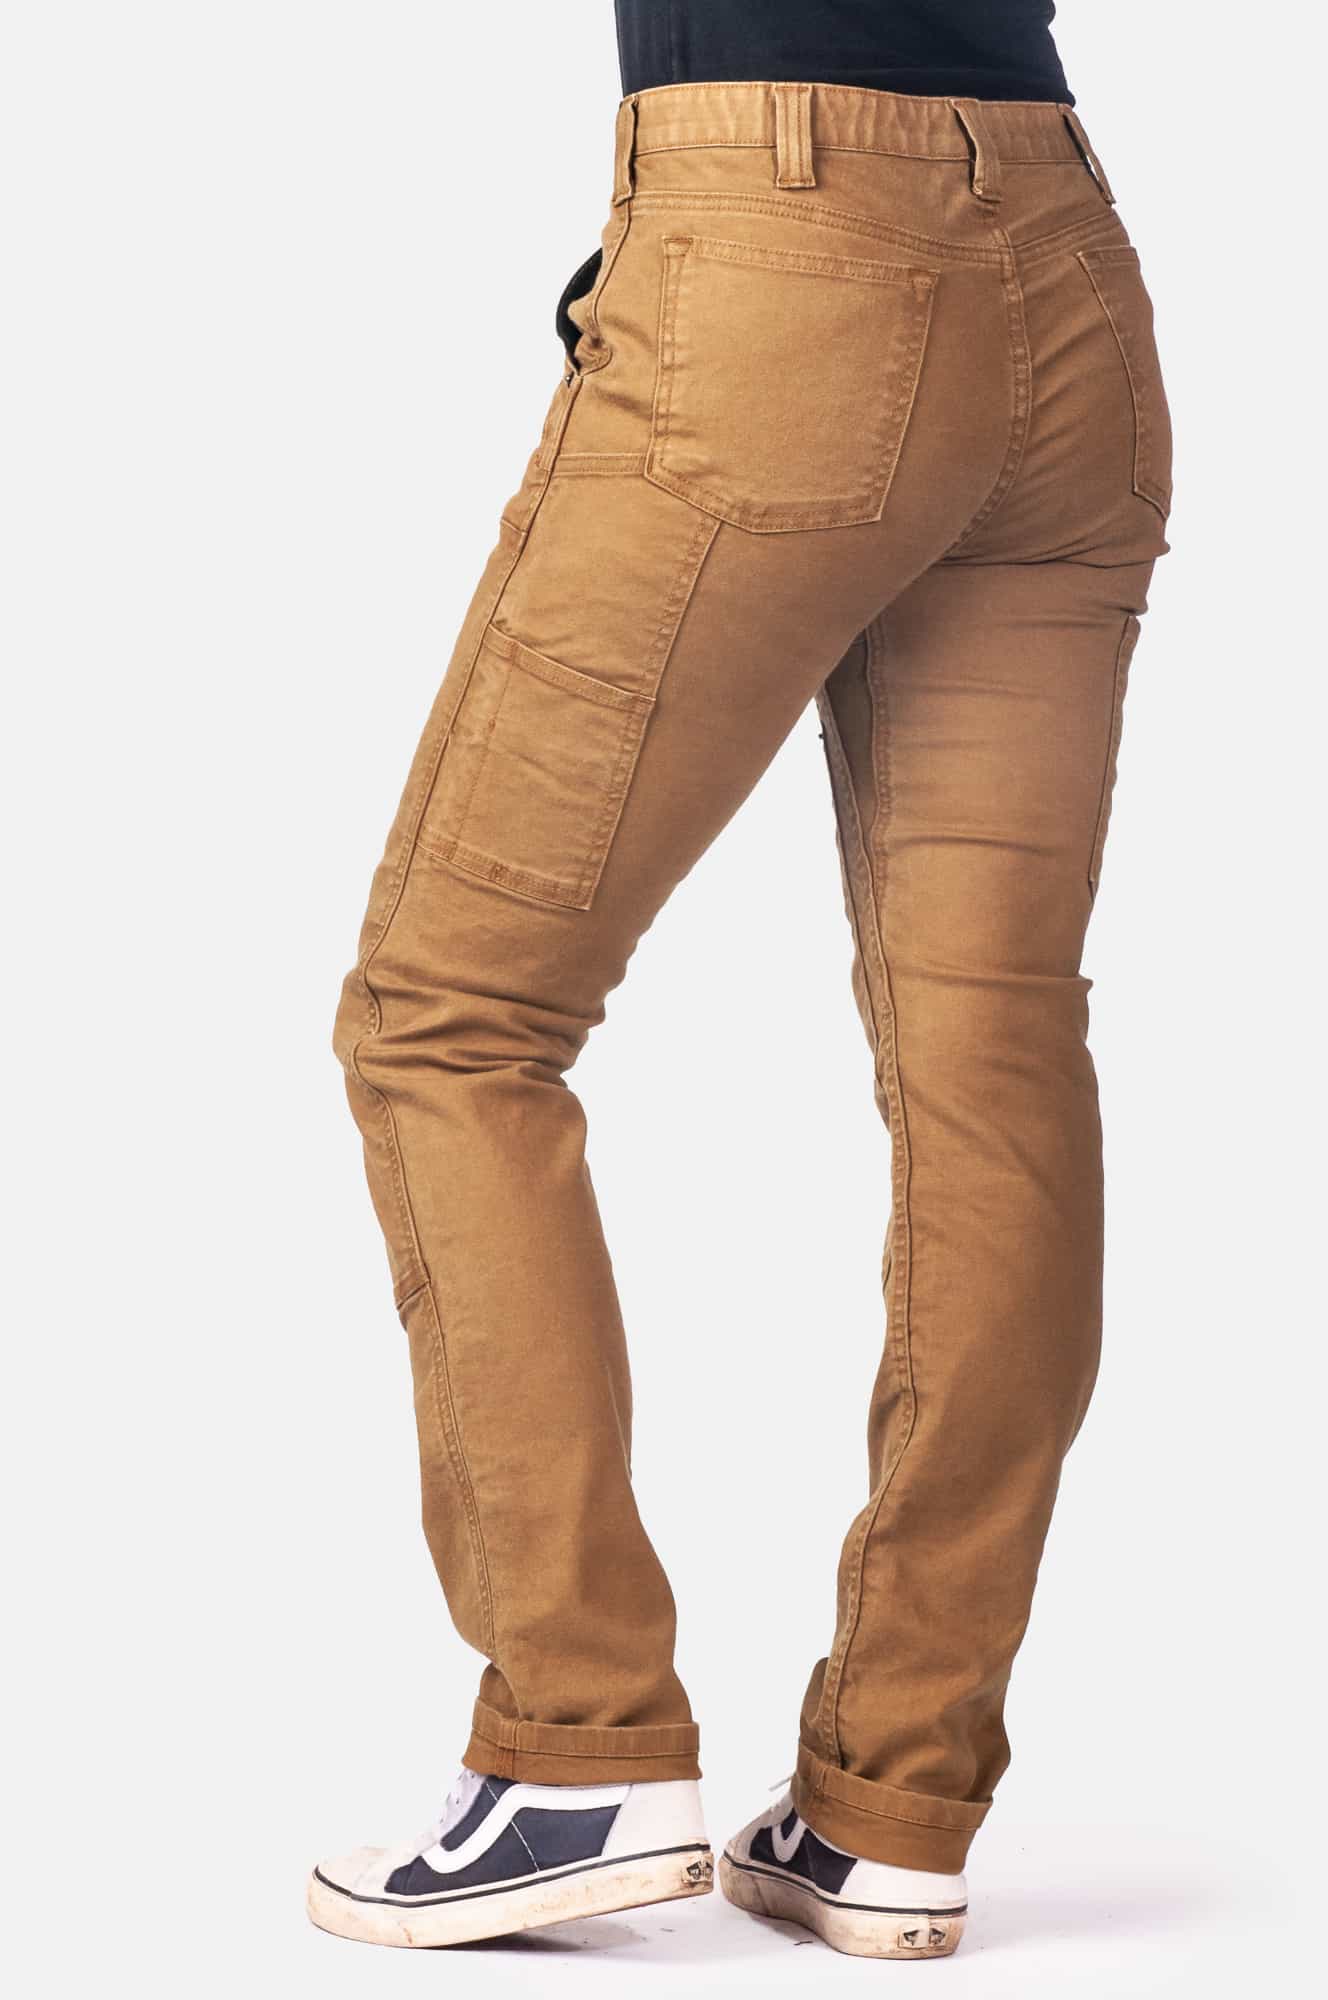 Dovetail Workwear Women's Saddle Brown Canvas Work Pants (14 X 32